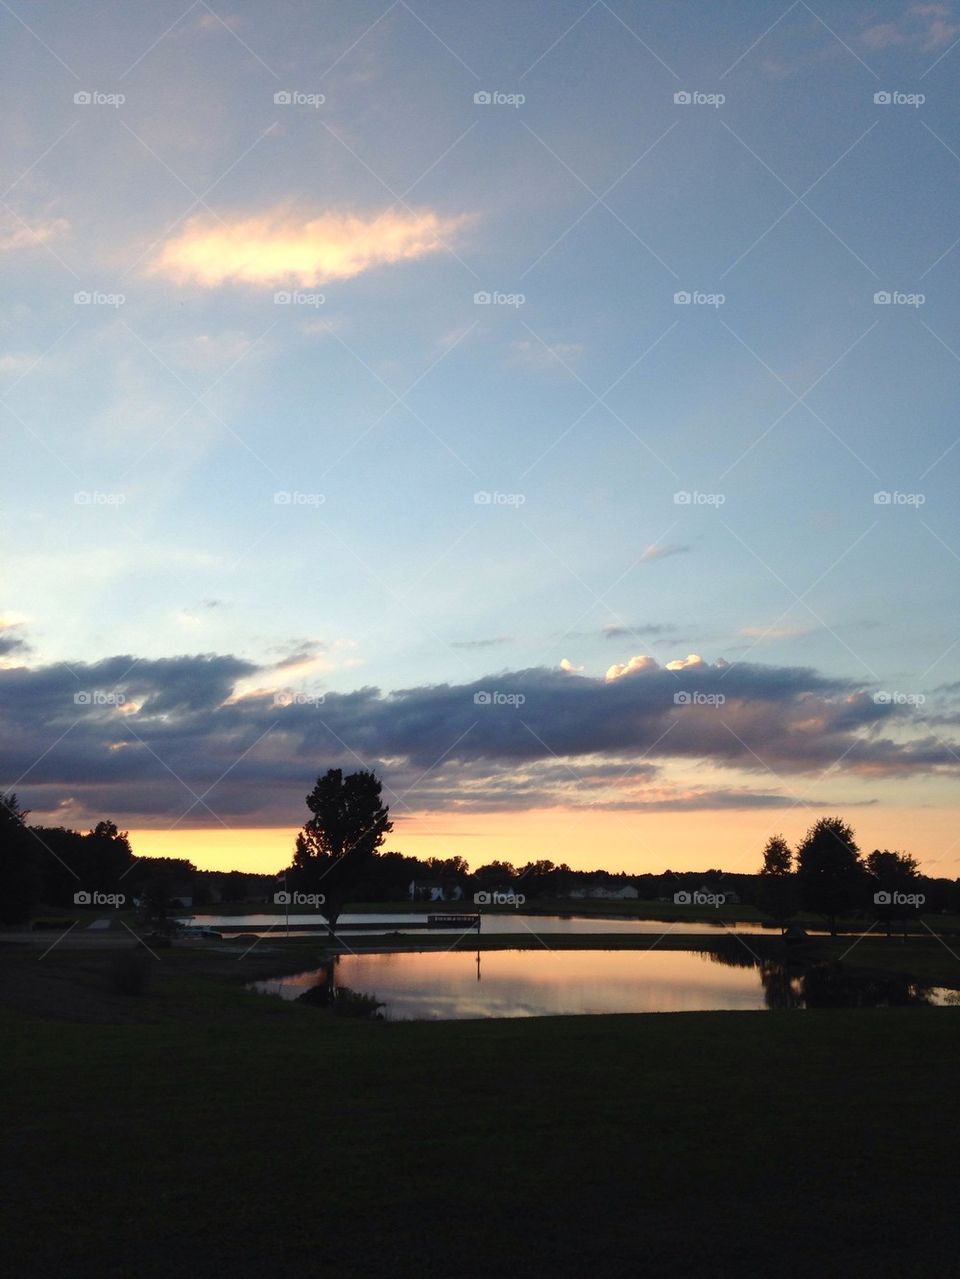 Sunset Lakes